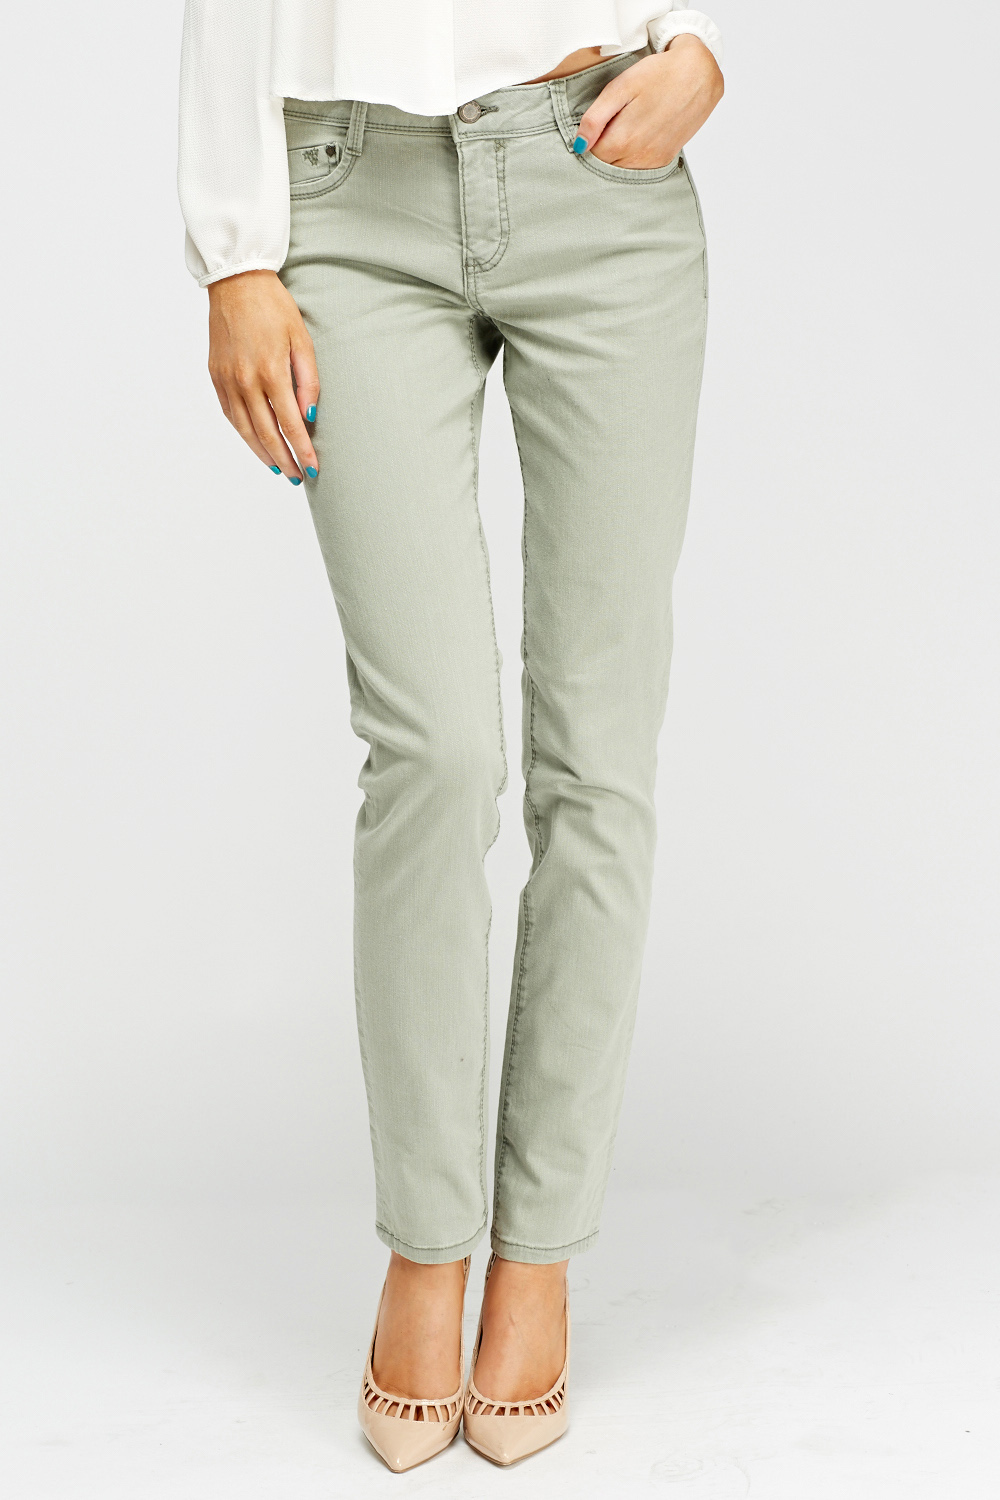 Light Green Straight Leg Jeans - Just $7